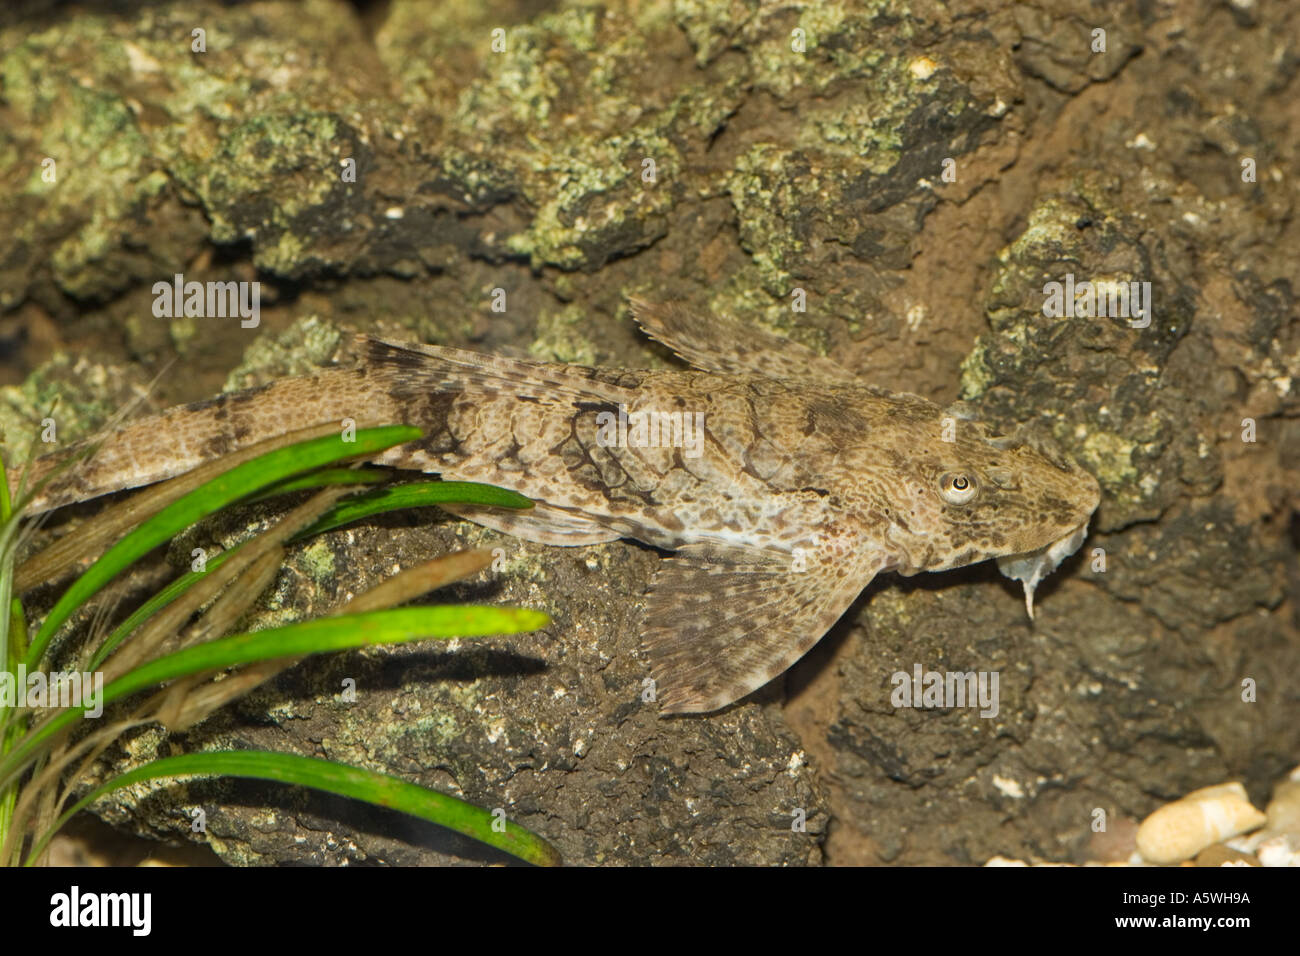 Rineloricaria sp The Whiptail Catfish Stock Photo